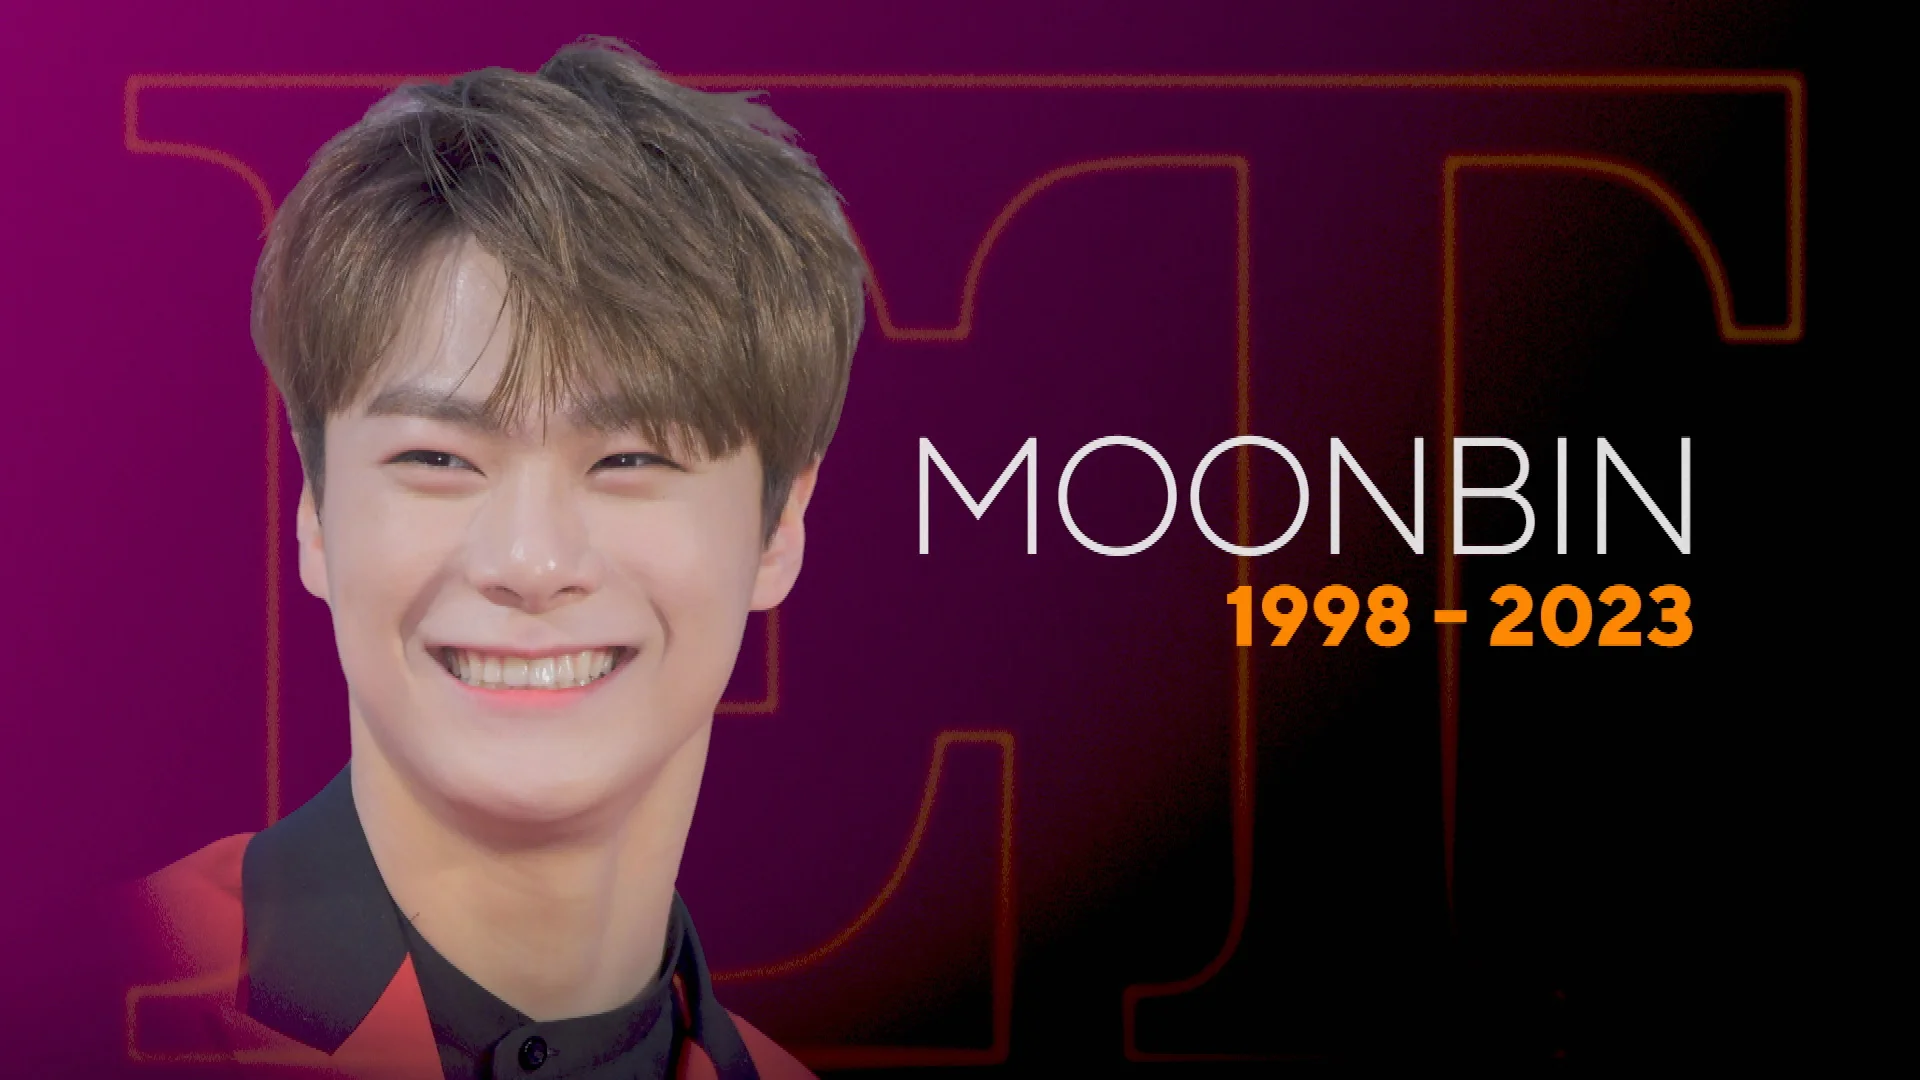 K-pop Star Of ASTRO Fame Moonbin, Dies At 25